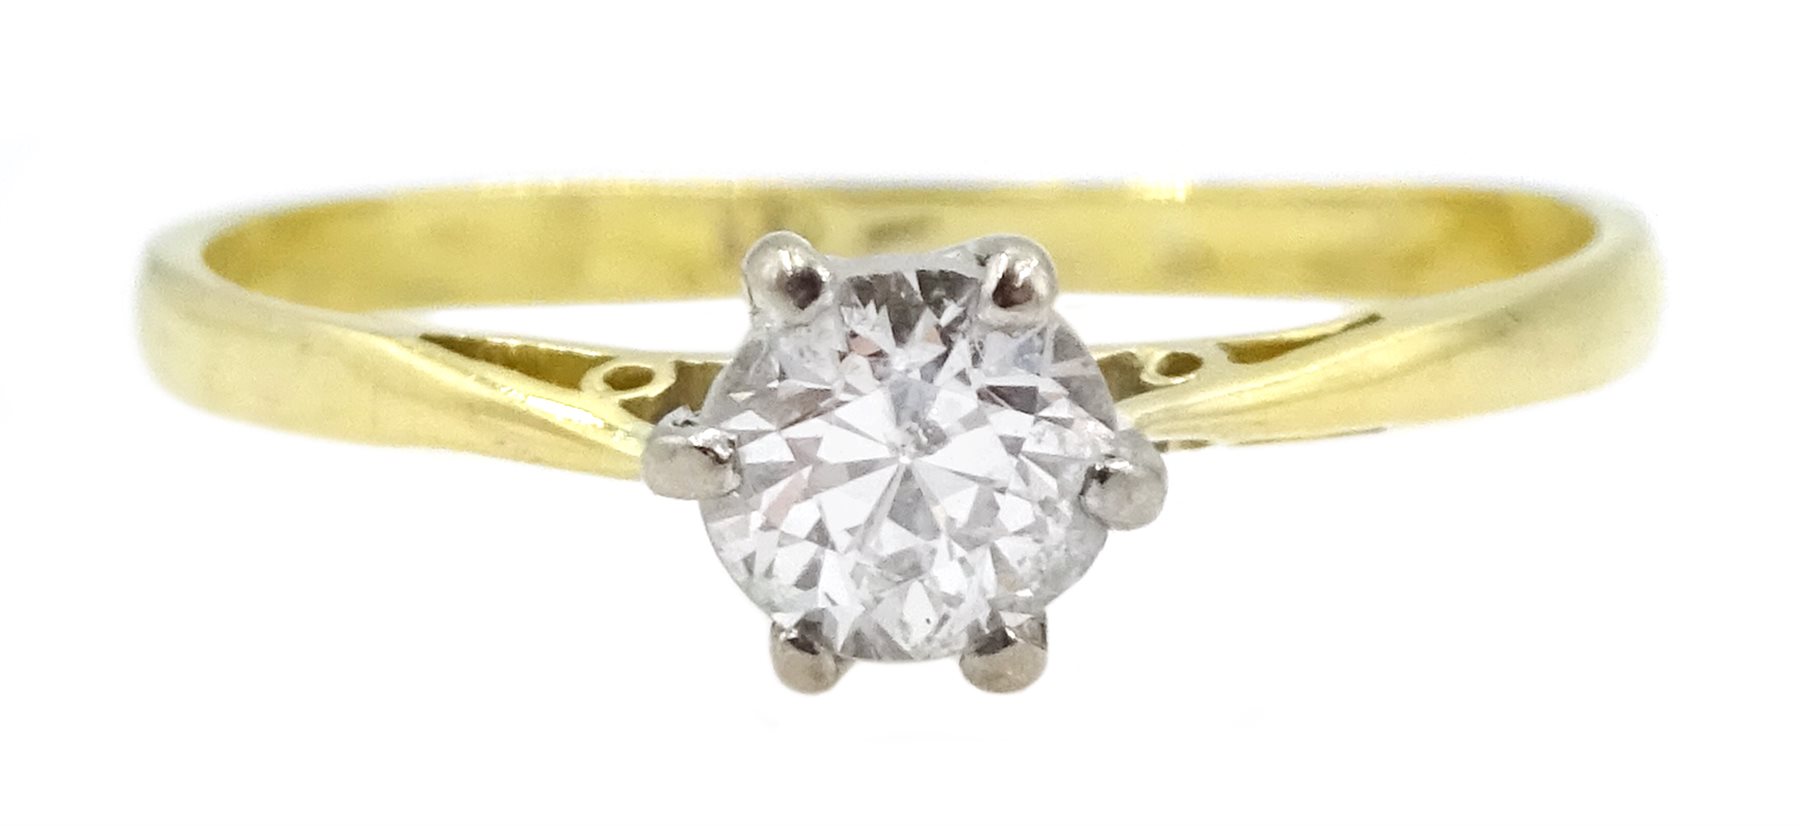 Gold single stone diamond ring, stamped 18, diamond approx 0.30 carat